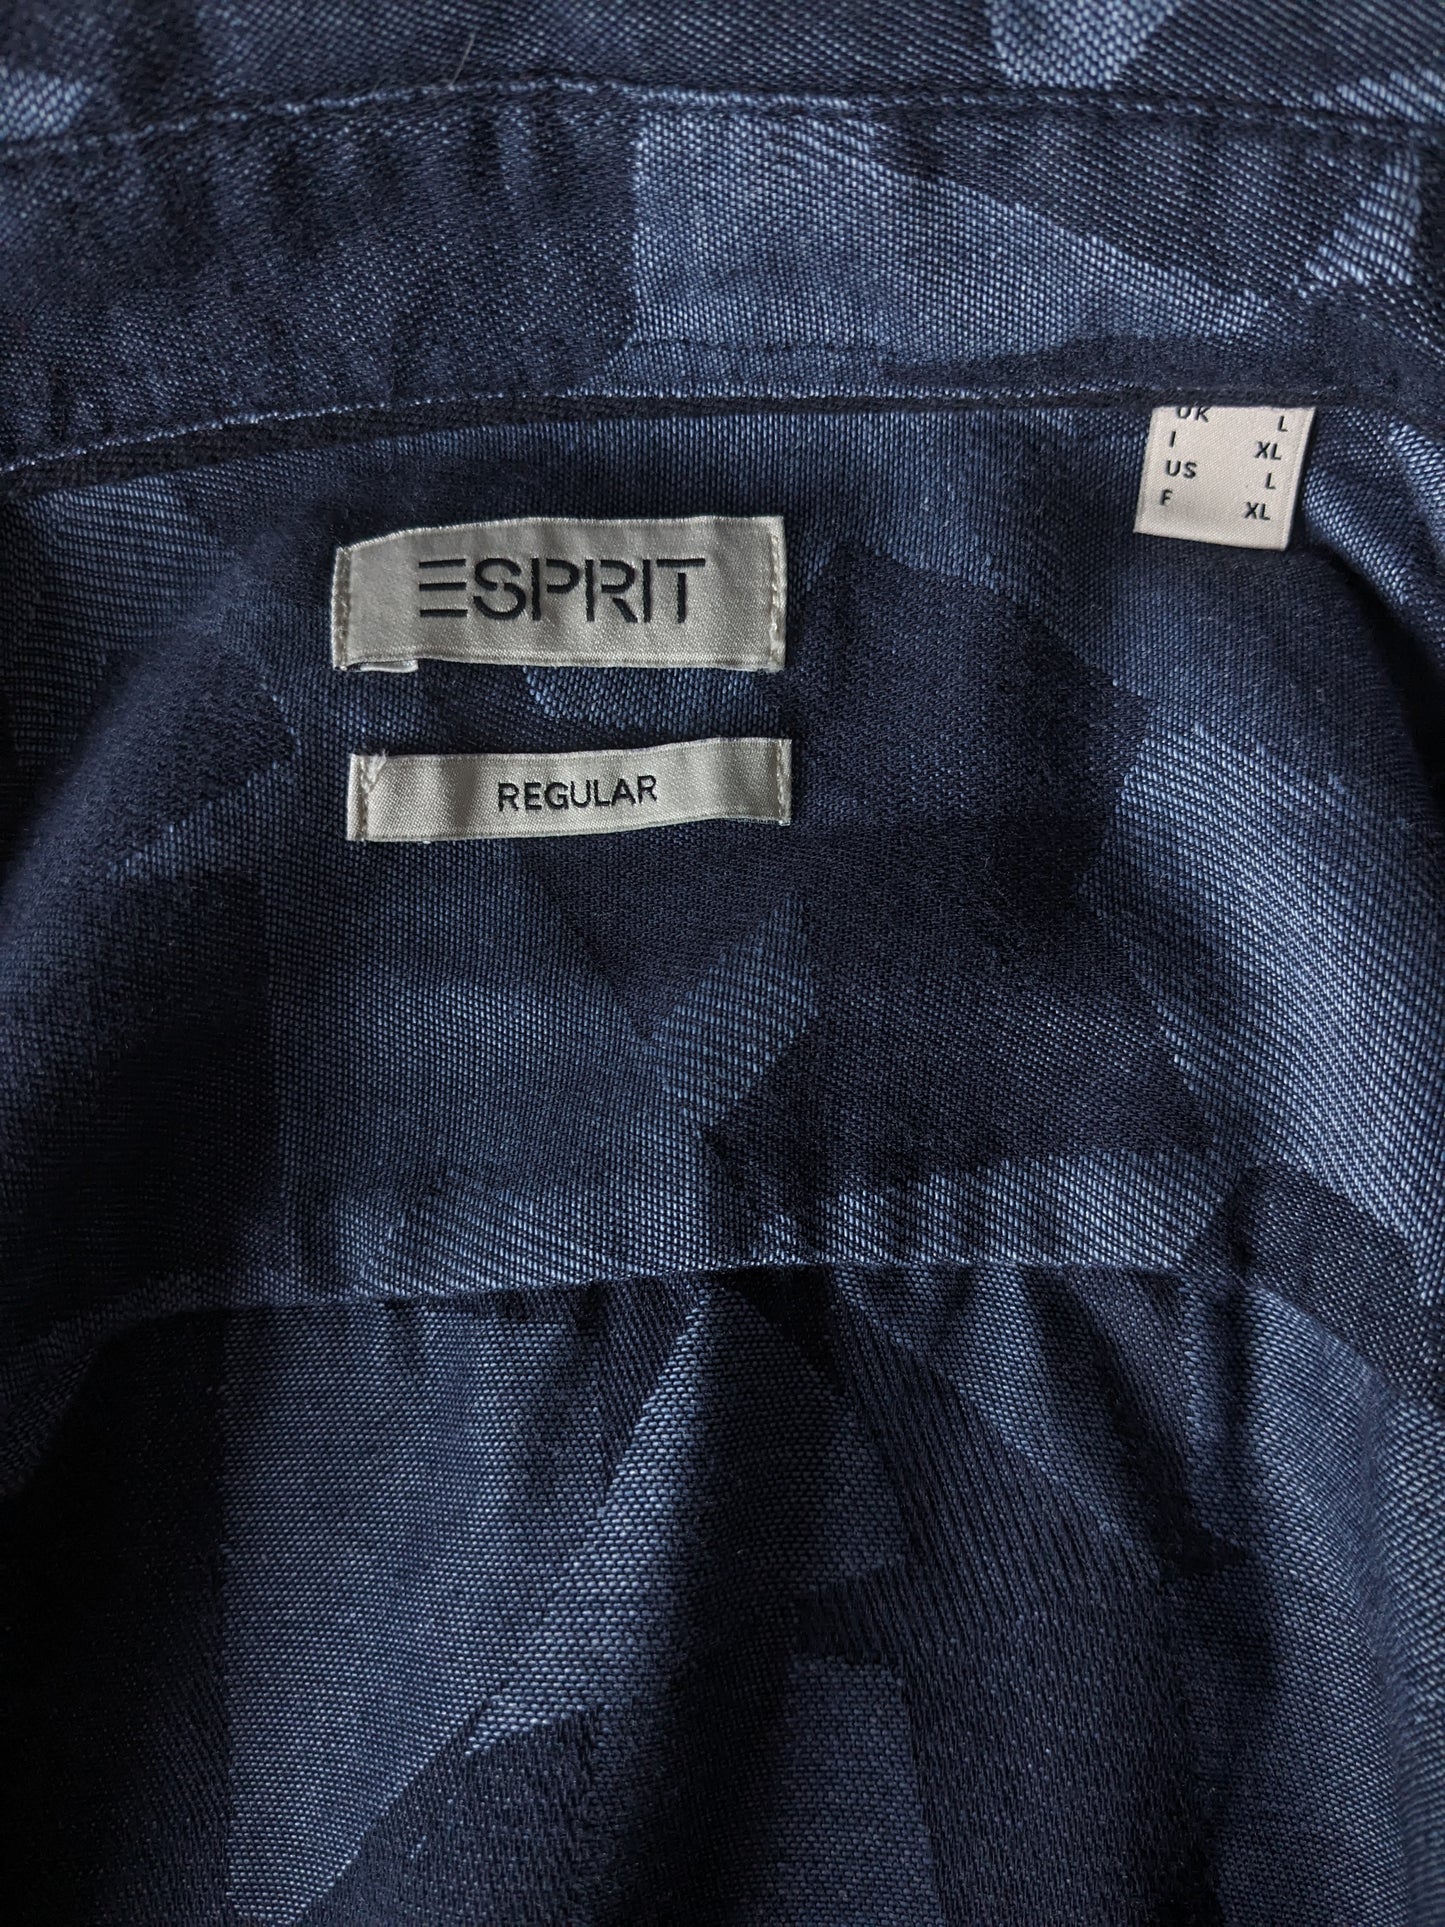 Esprit shirt. Blue print. Size L. Regular Fit.